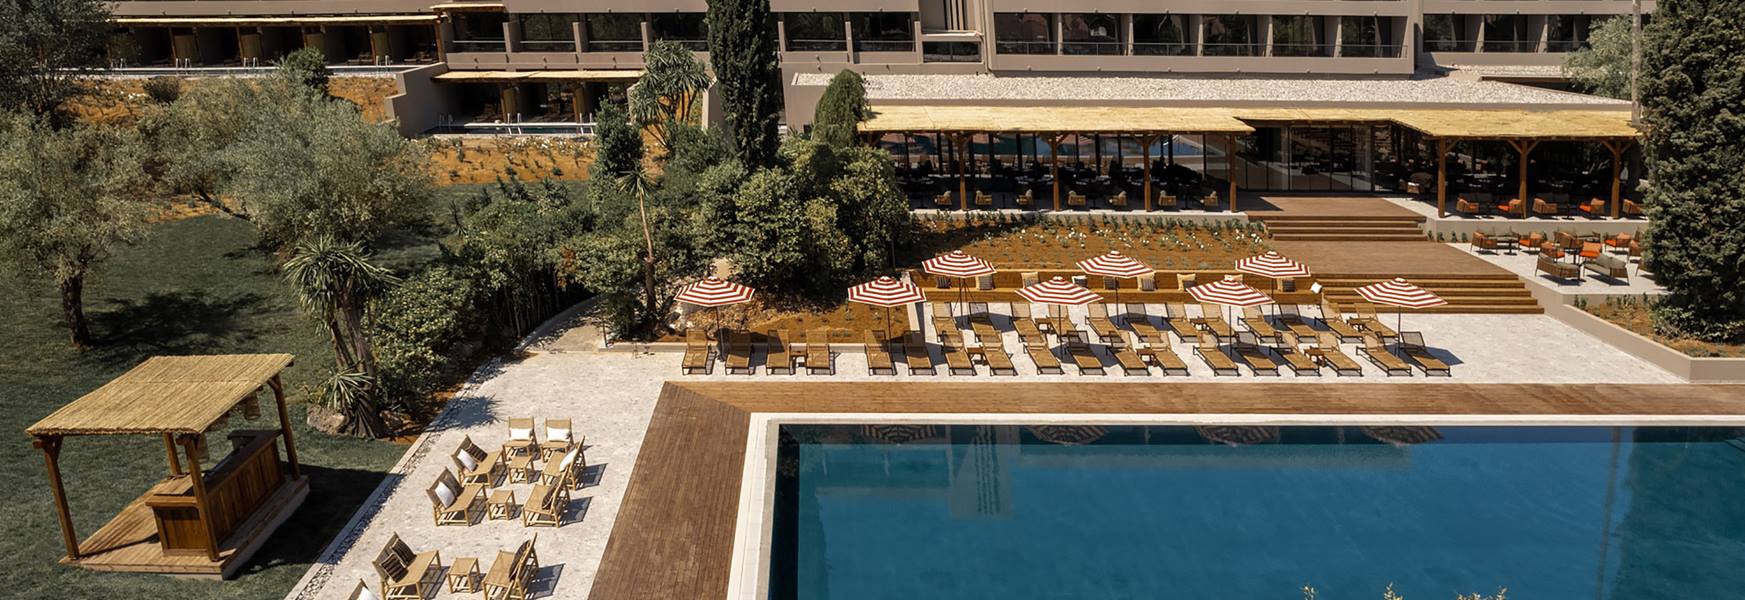 Hotel Cook's Club Corfu